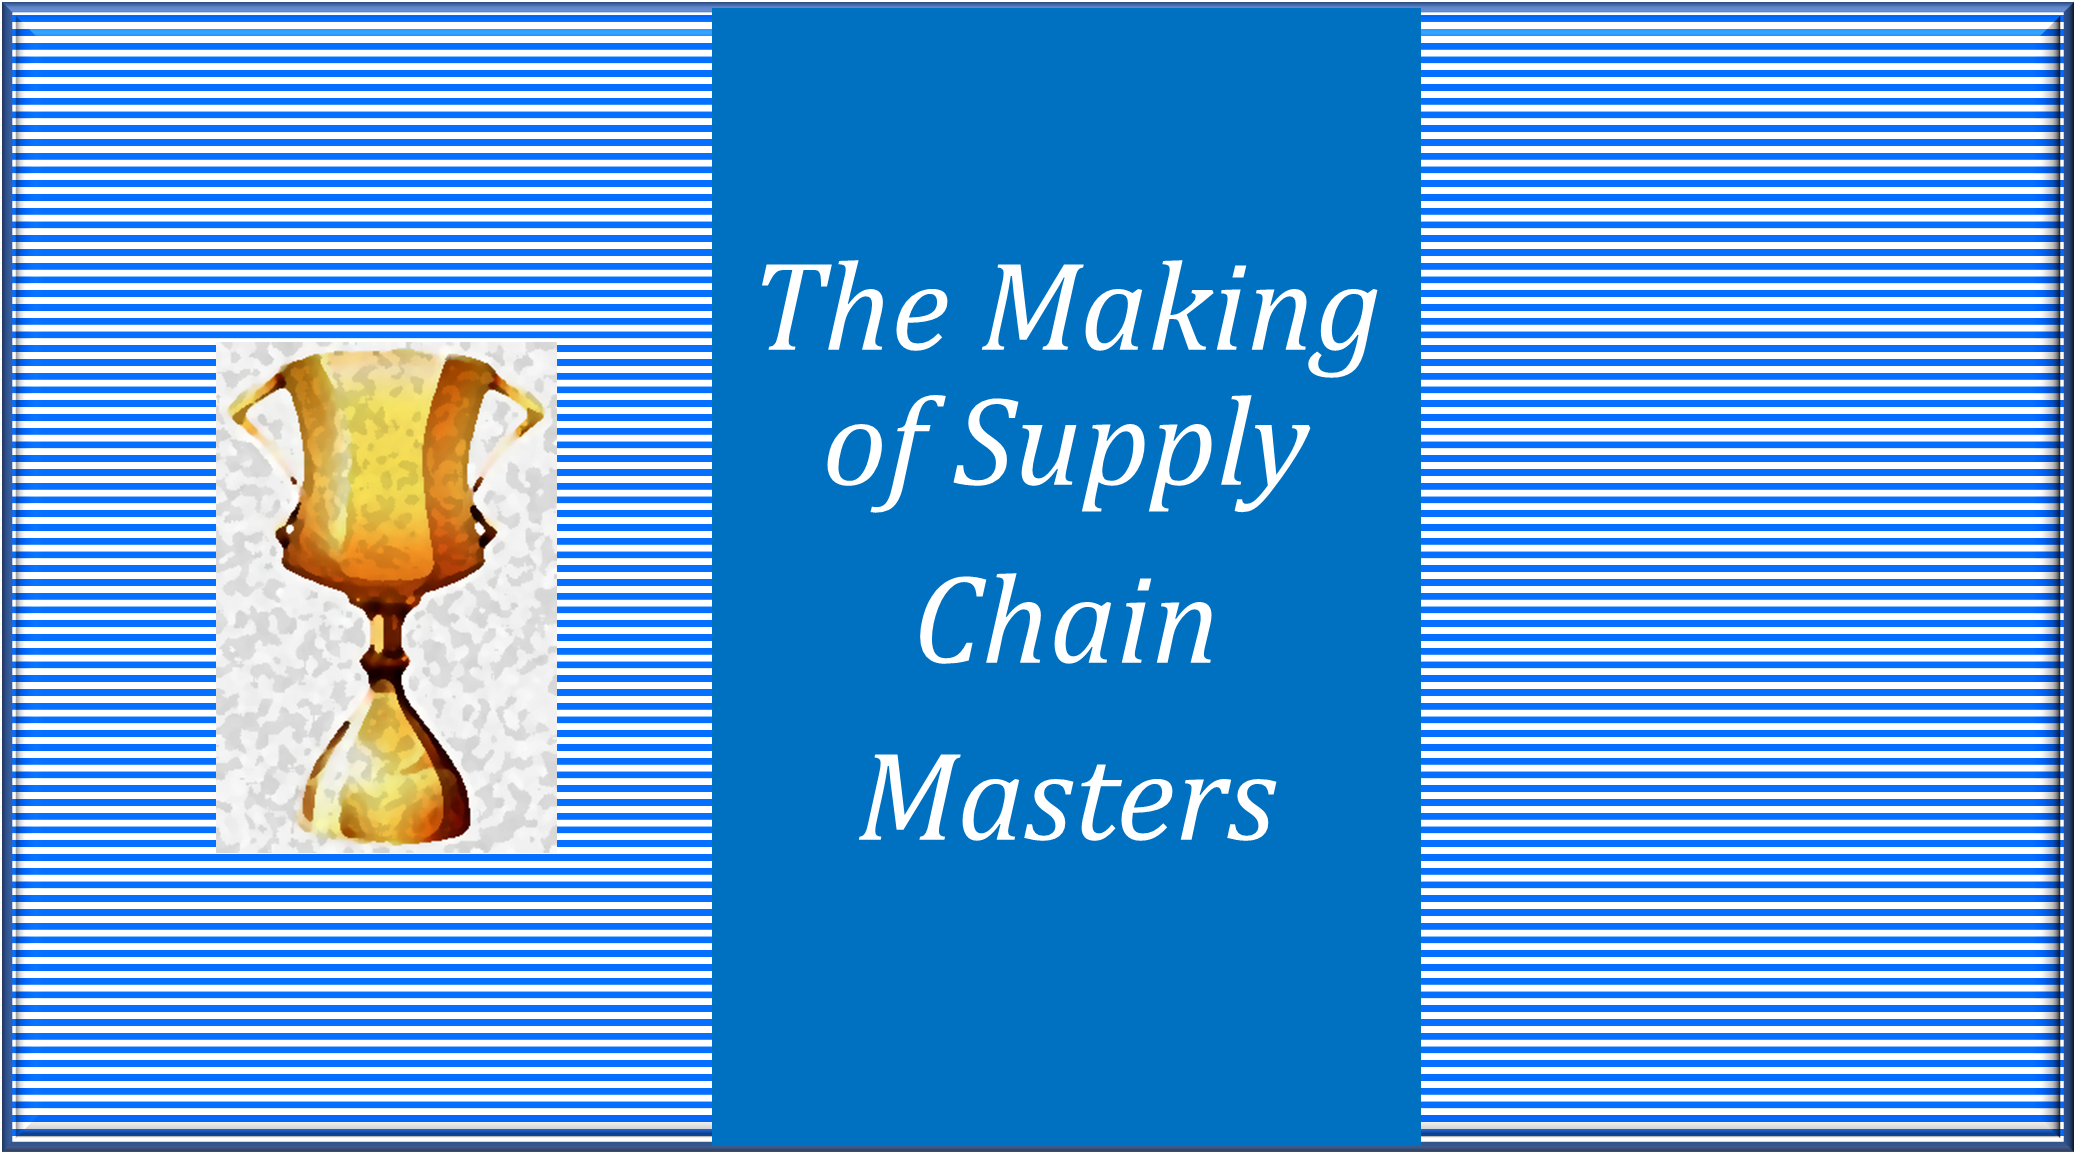 Supply Chain Masters, ©123RF, blueringmedia